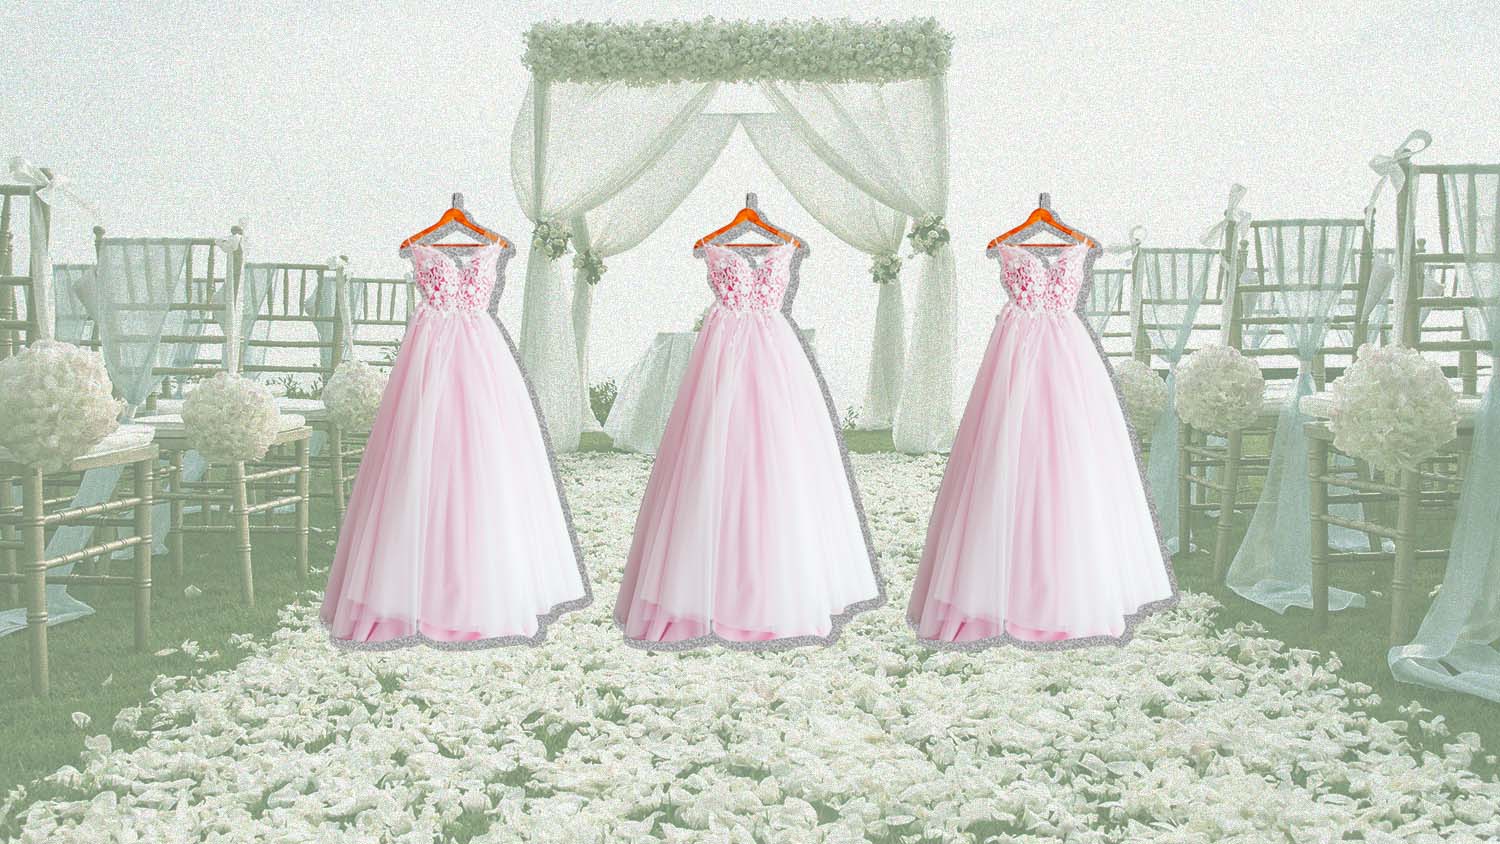 Three bridesmaids dresses over an aisle